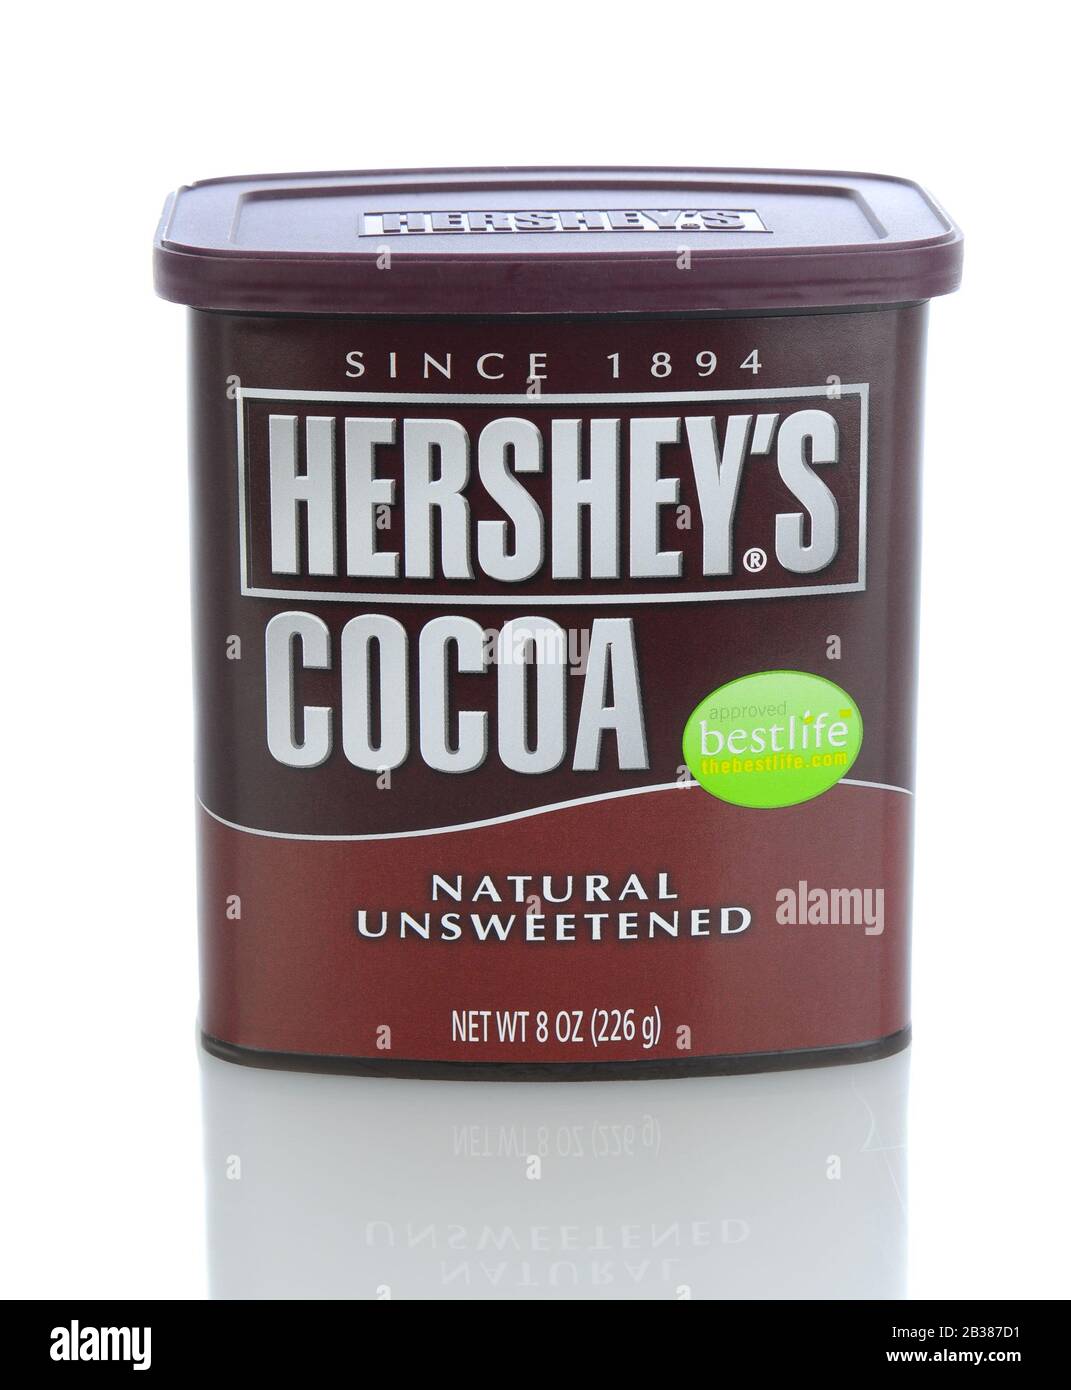 Irvine, CA - 11. Januar 2013: A 8 oz. CAN of Hershey's Cocoa. Die Hershey Company ist der größte Schokoladenhersteller in Nordamerika. Stockfoto